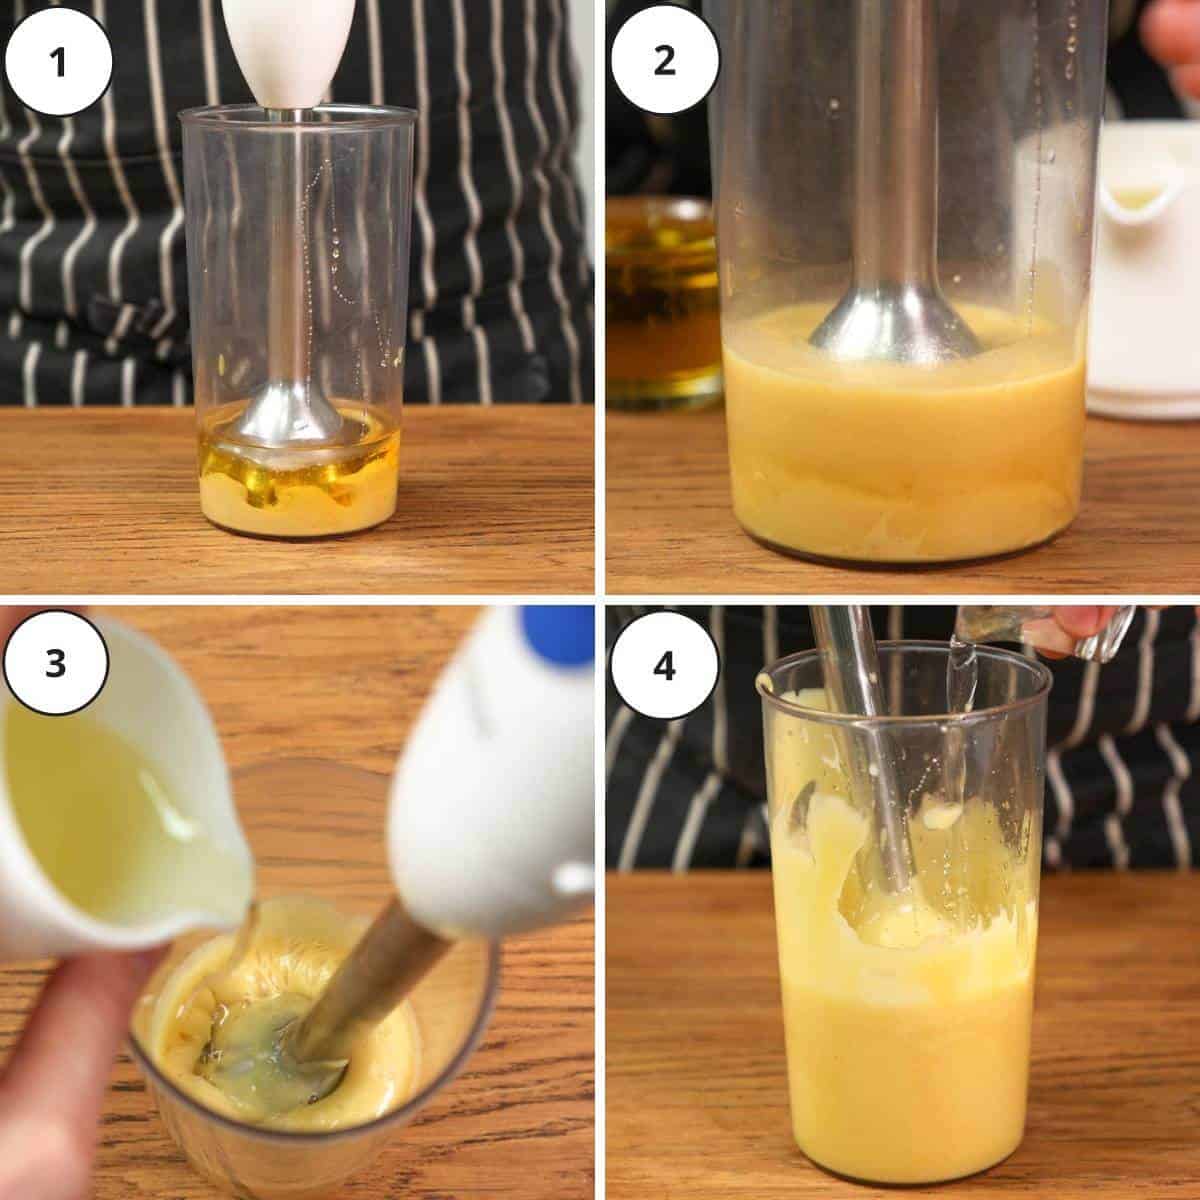 Picture steps for making honey mustard dressing.